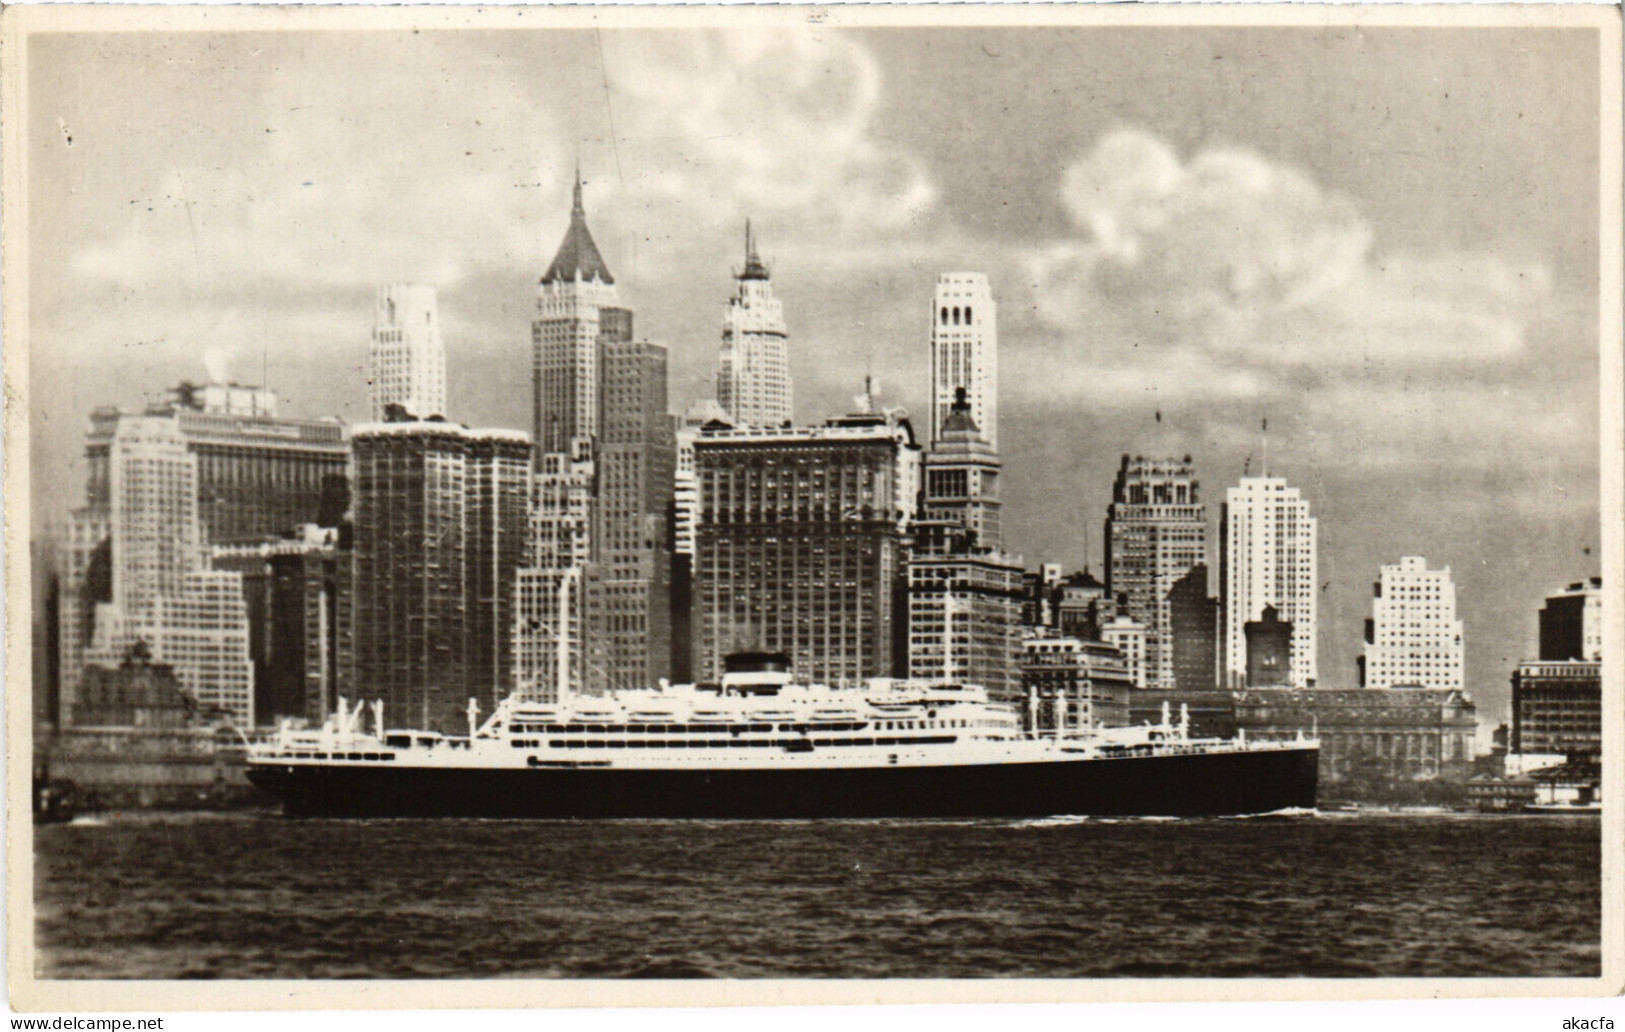 PC US, NY, NEW YORK, MS SATURNIA SHIP, Vintage REAL PHOTO Postcard (b49545) - Transportmiddelen